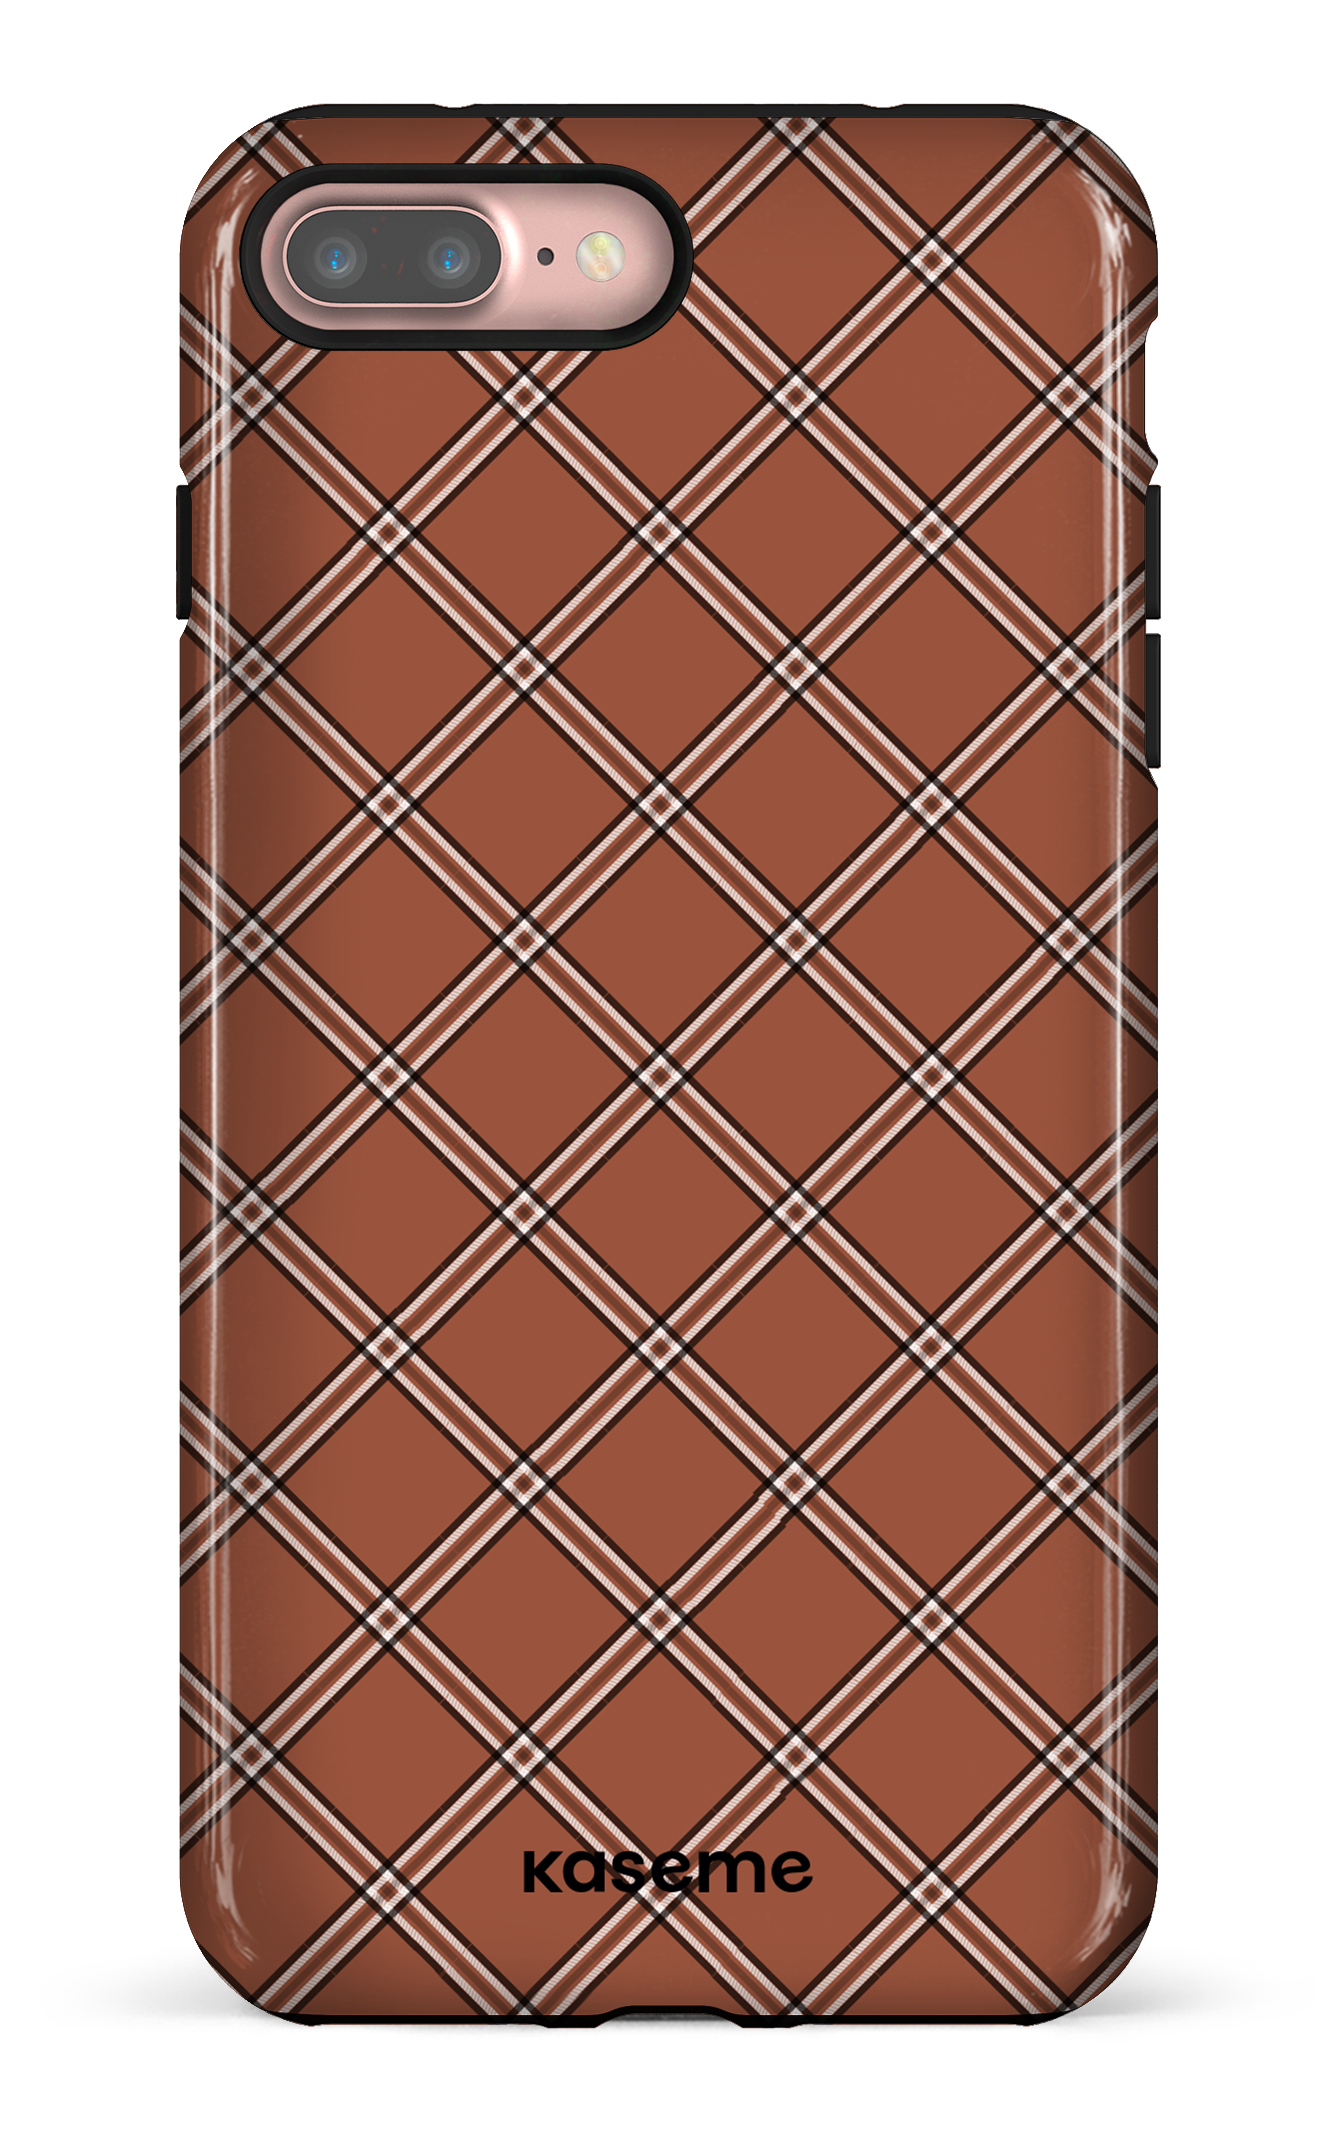 Flannel - iPhone 7 Plus